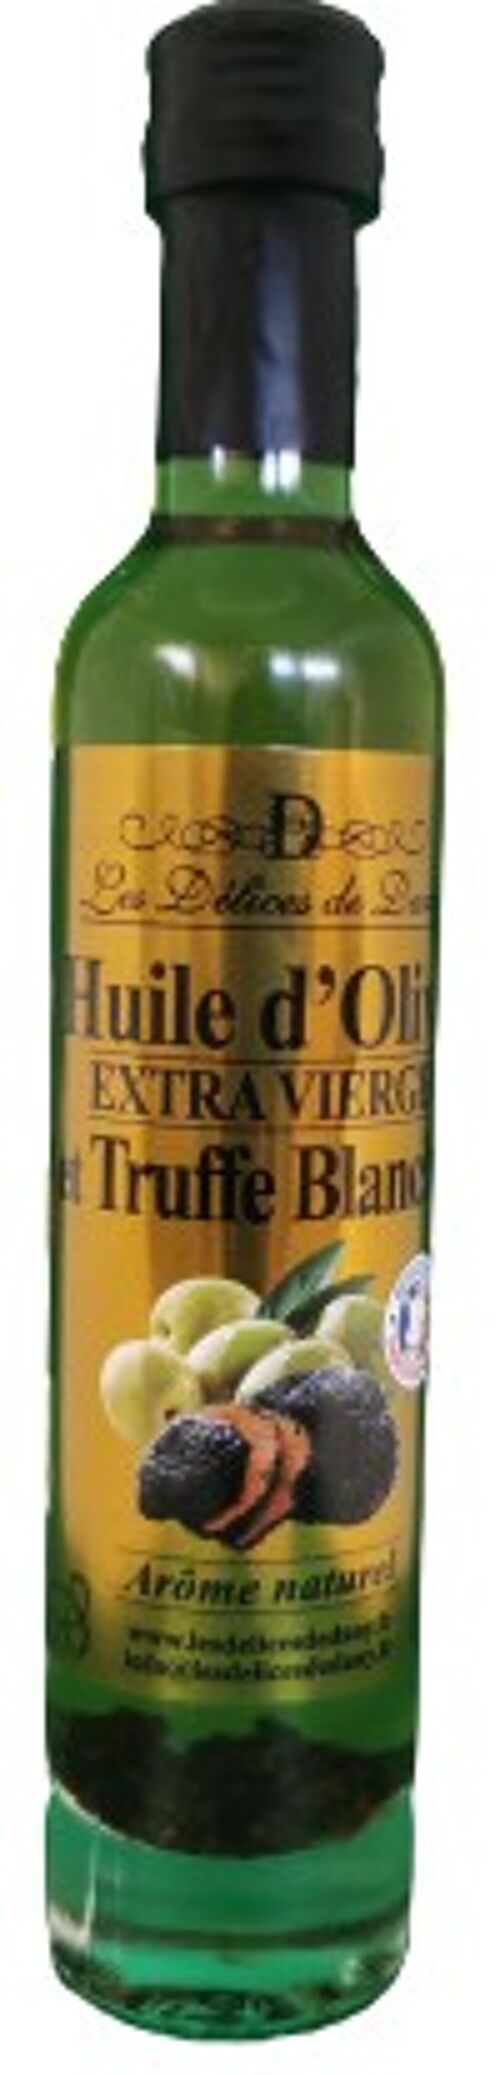 Huile d'olive vierge extra à la Truffe blanche